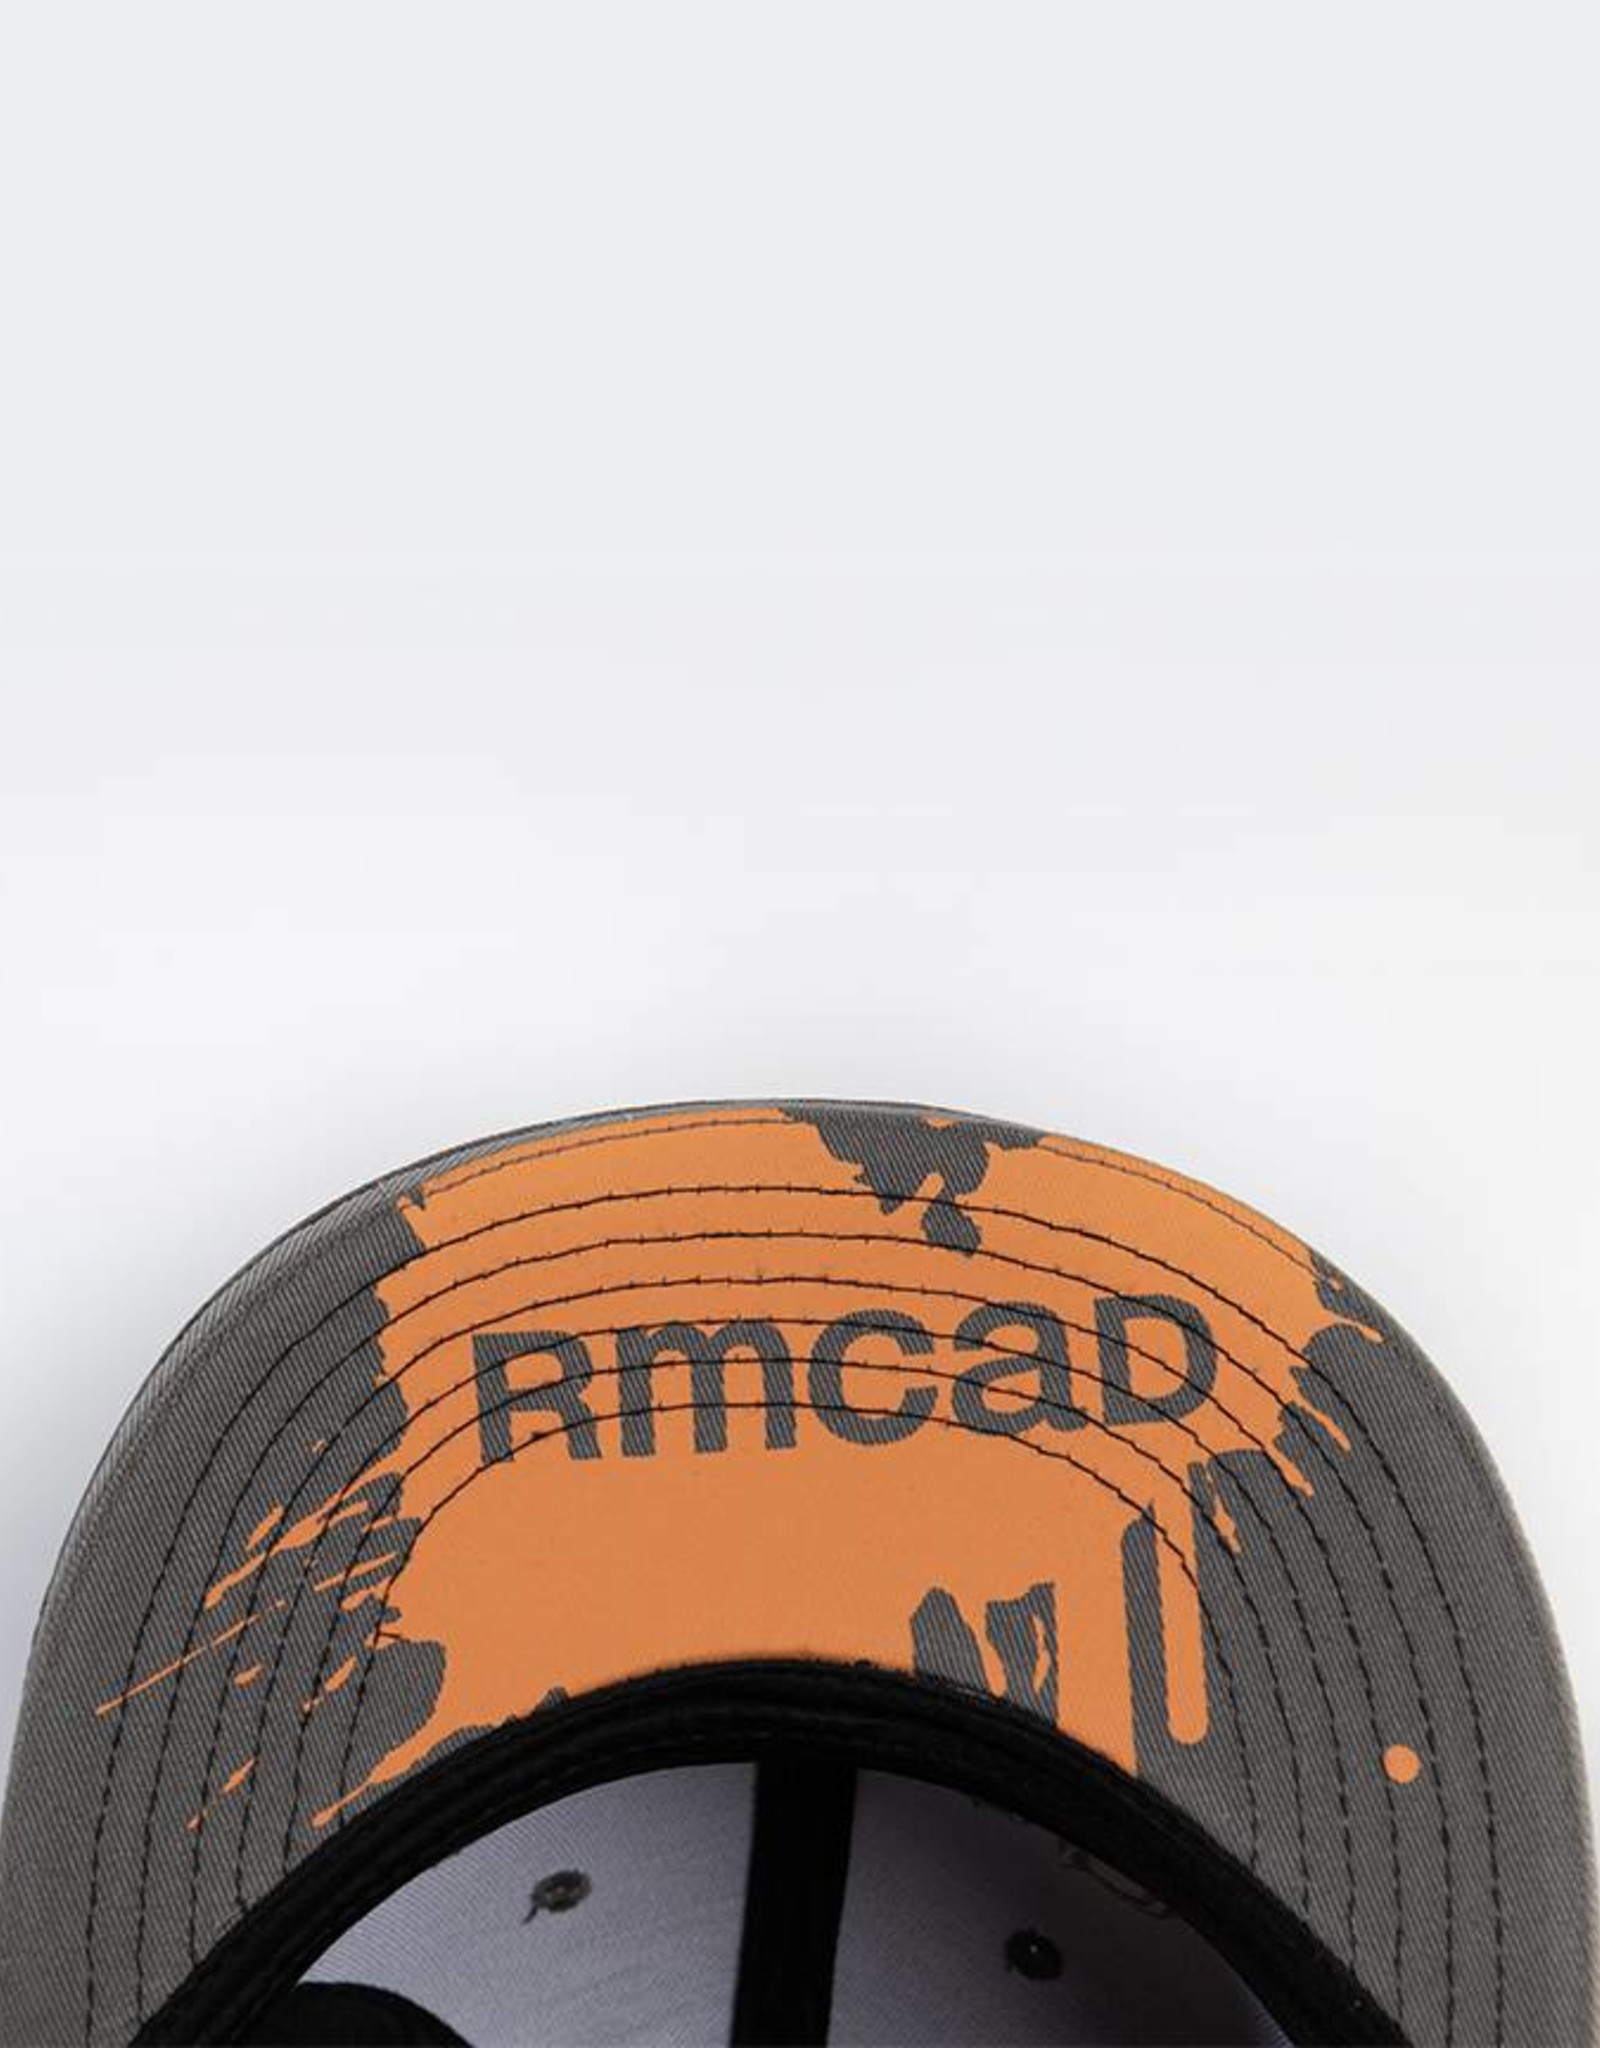 Outdoor Cap RMCAD Grey Dome Hat